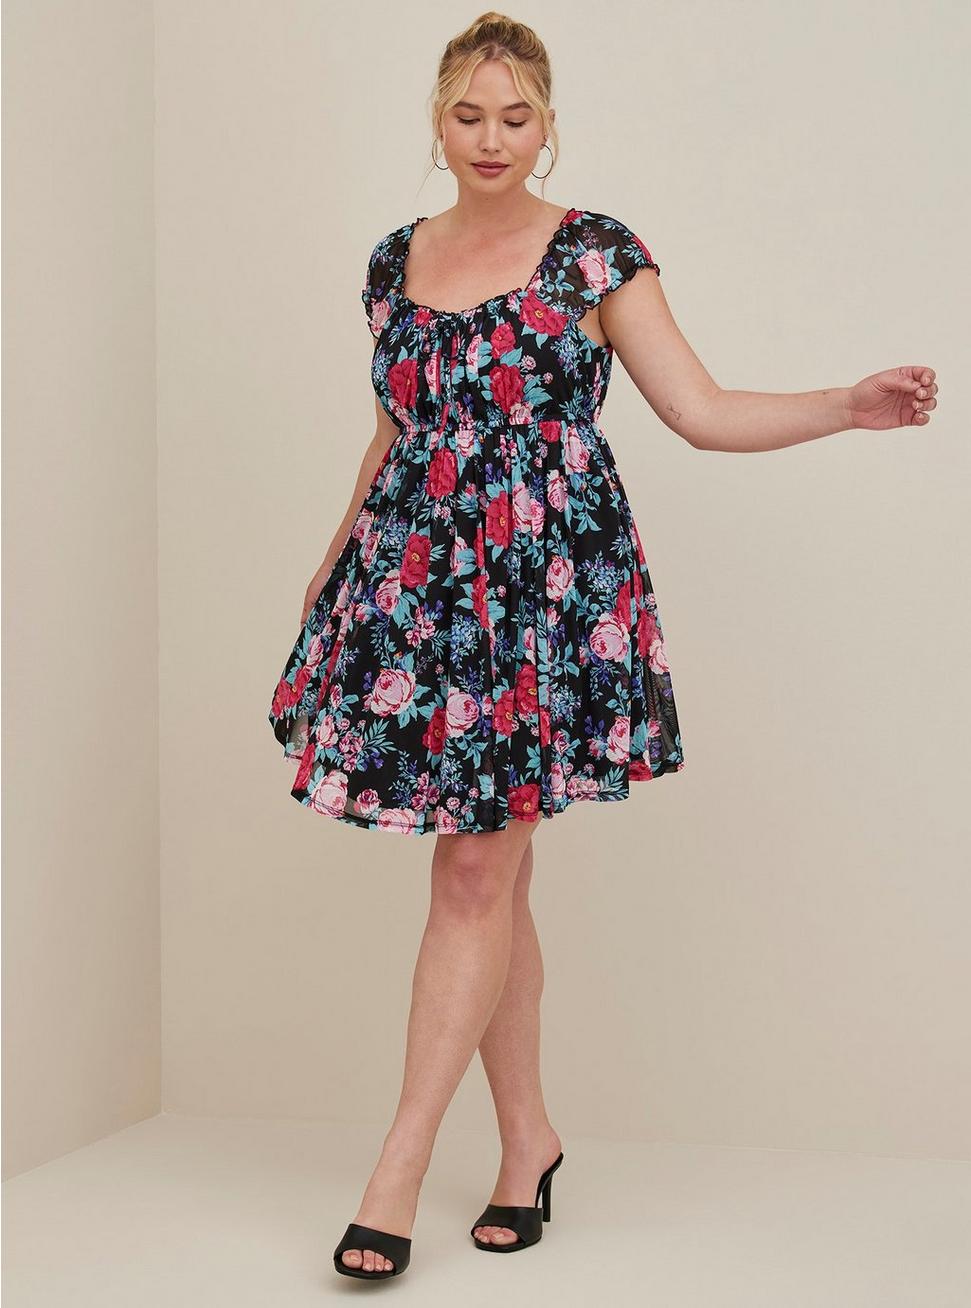 Plus Size Sweetheart Mini Dress - Mesh Floral Black, FLORAL BLACK, hi-res